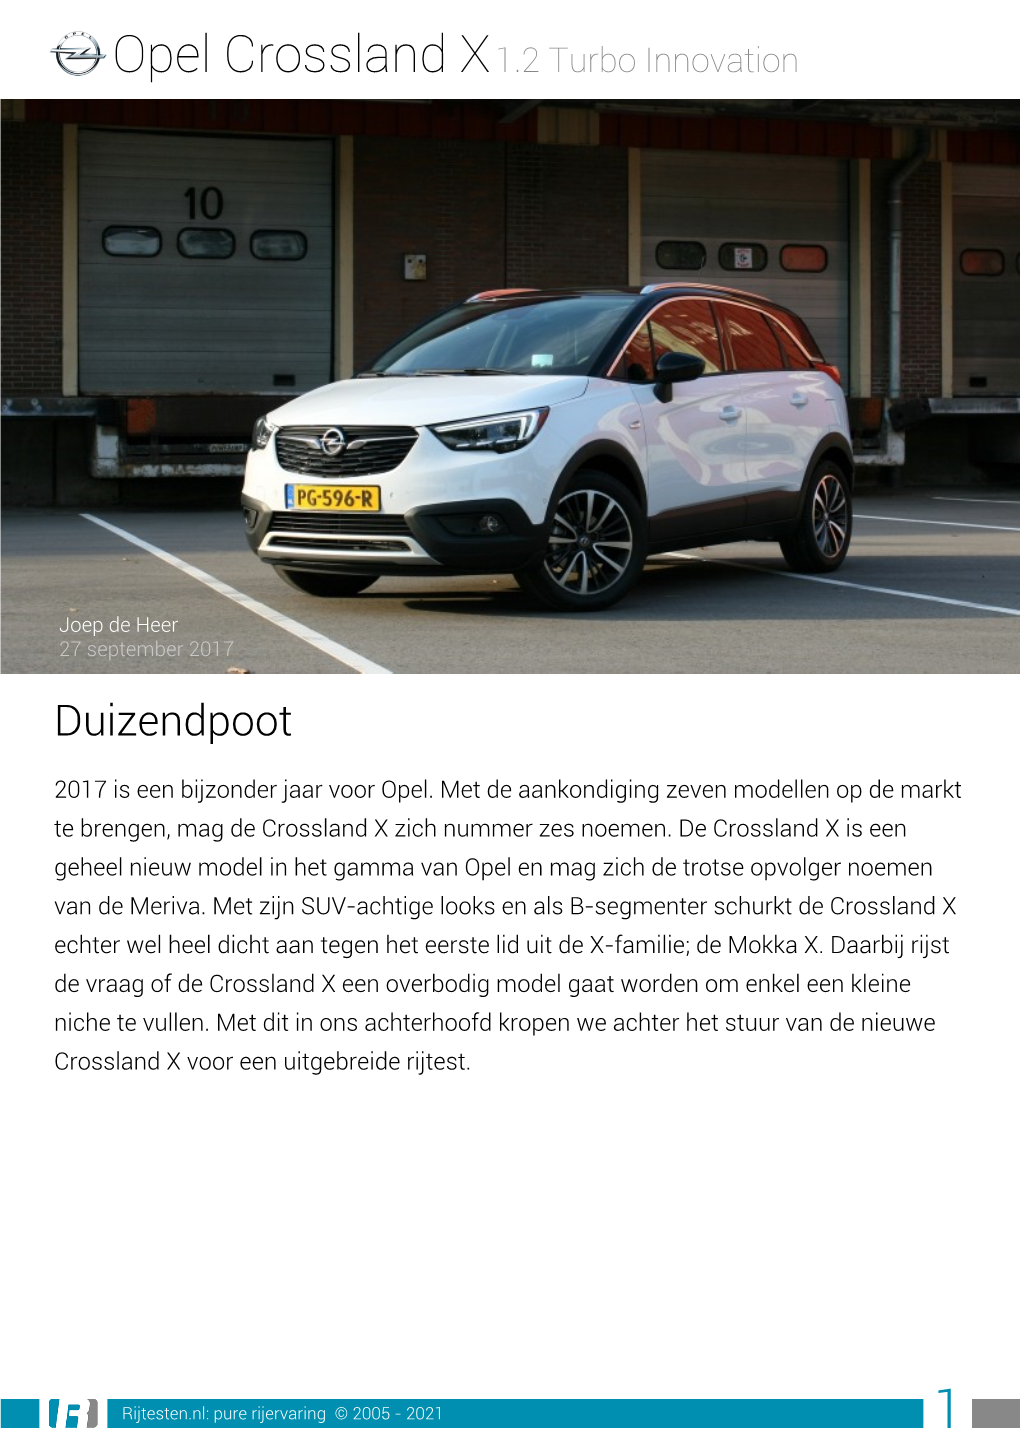 Opel Crossland X1.2 Turbo Innovation